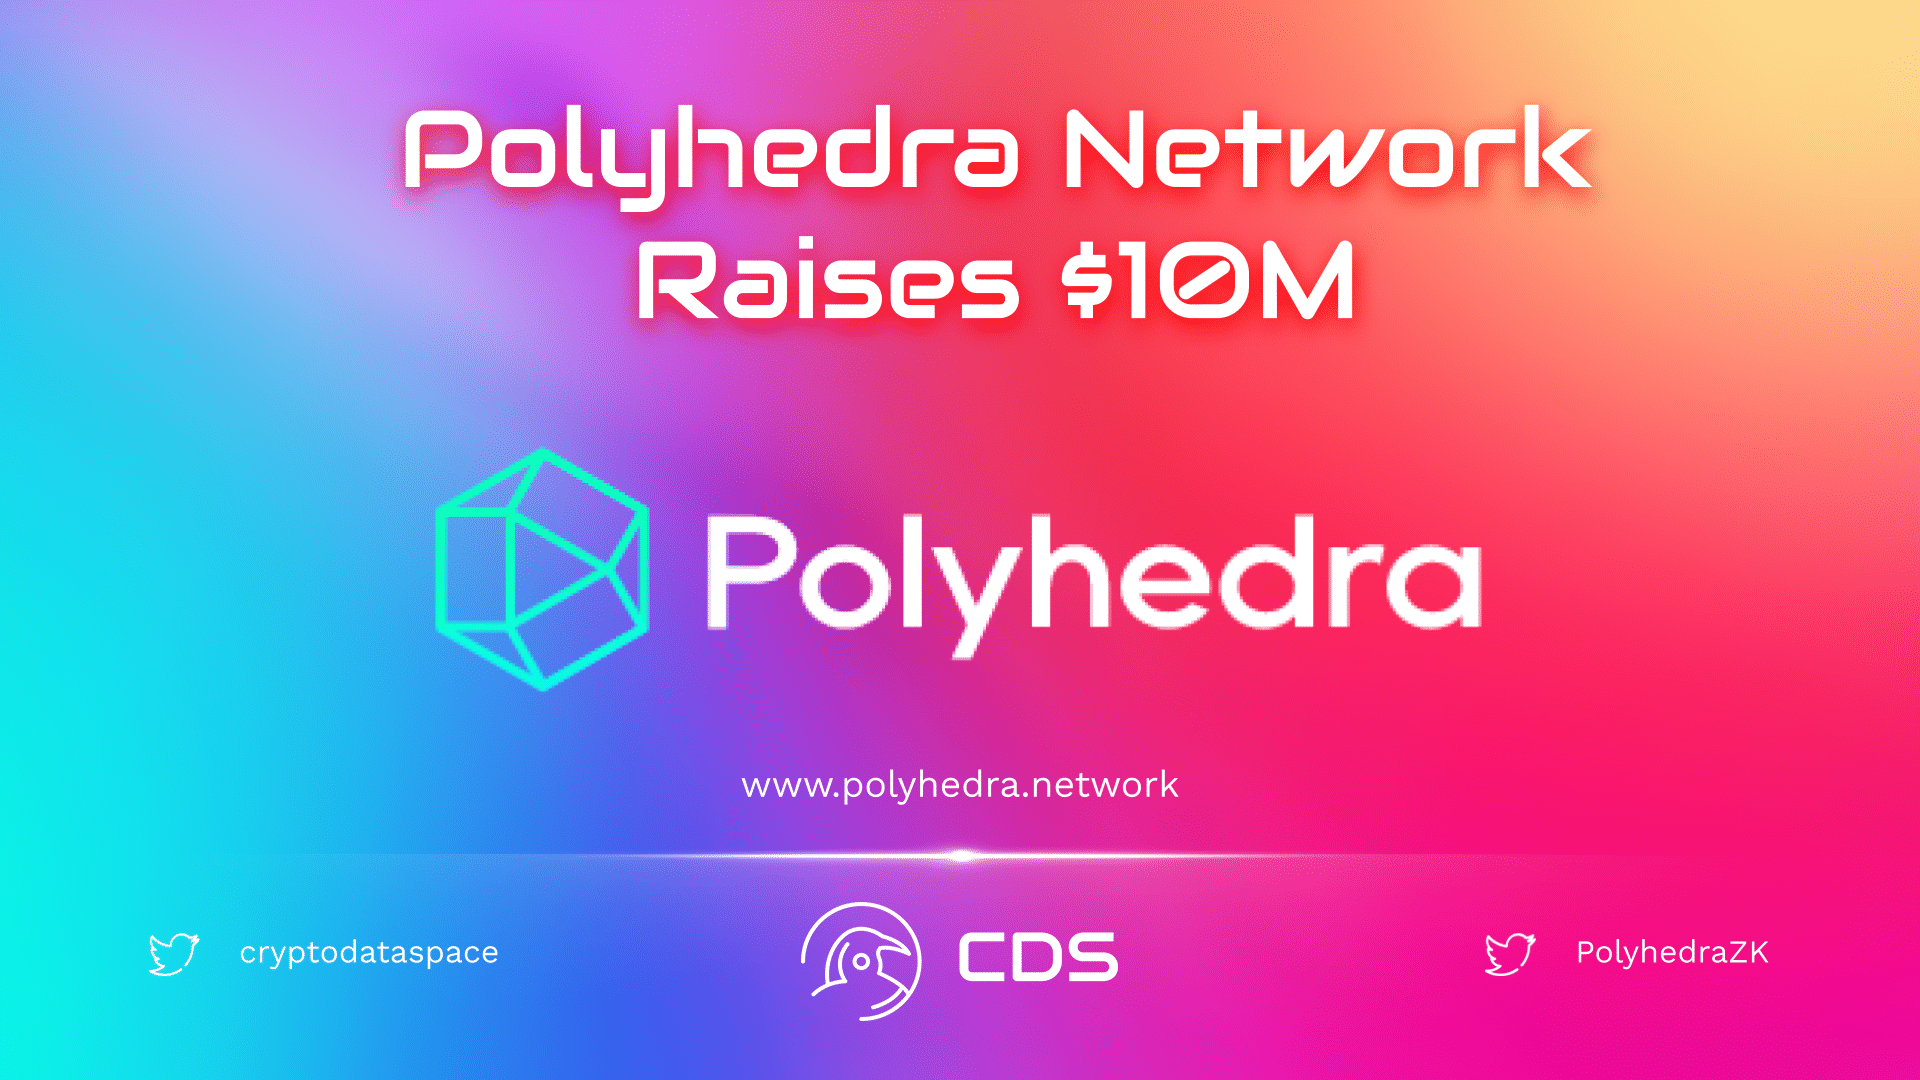 Polyhedra Network Raises $10M